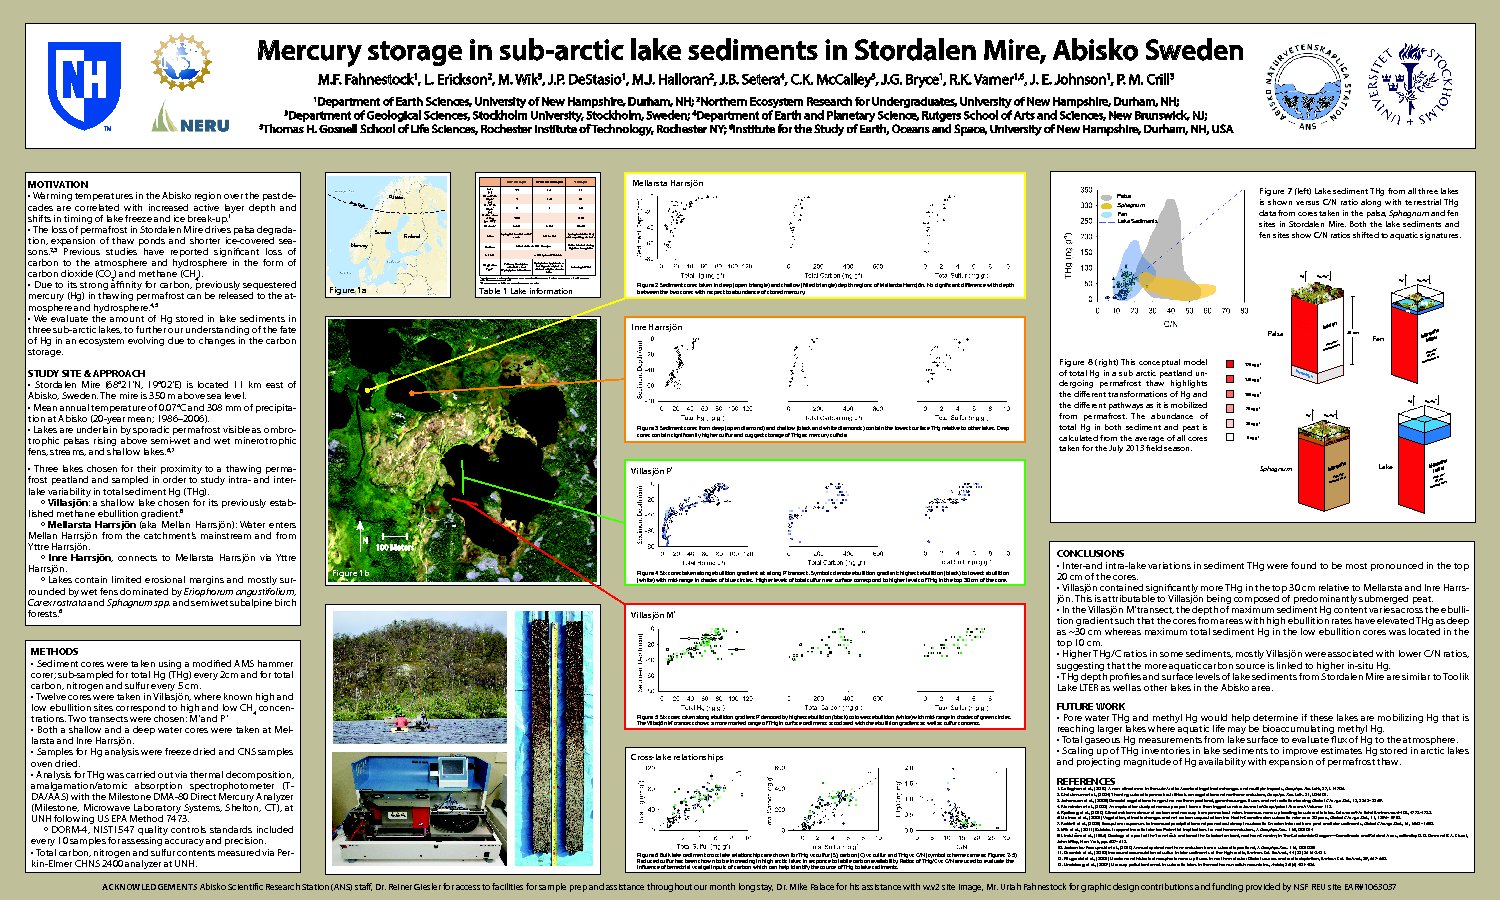 Mercury Storage In Sub-Arctic Lake Sediments In Stordalen Mire, Abisko Sweden  by MFF7